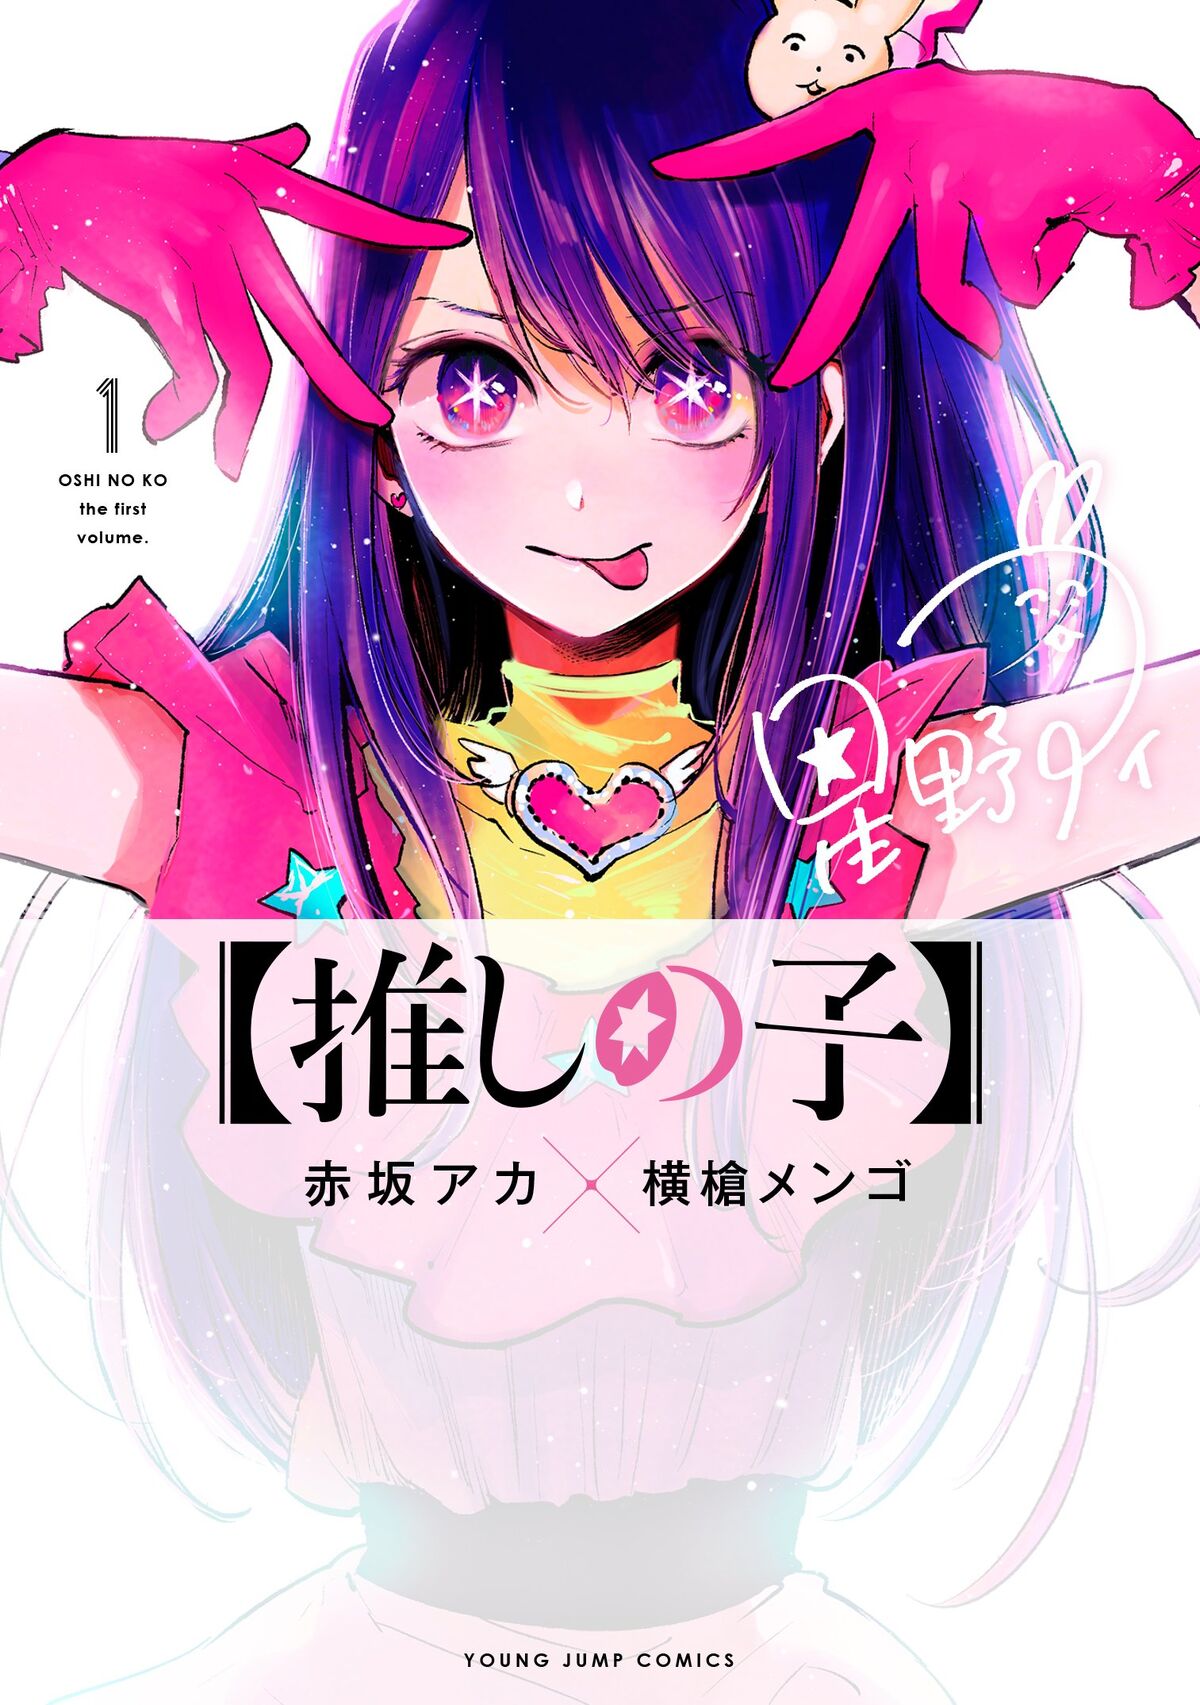 Oshi no Ko: Dónde verlo, manga online y personajes